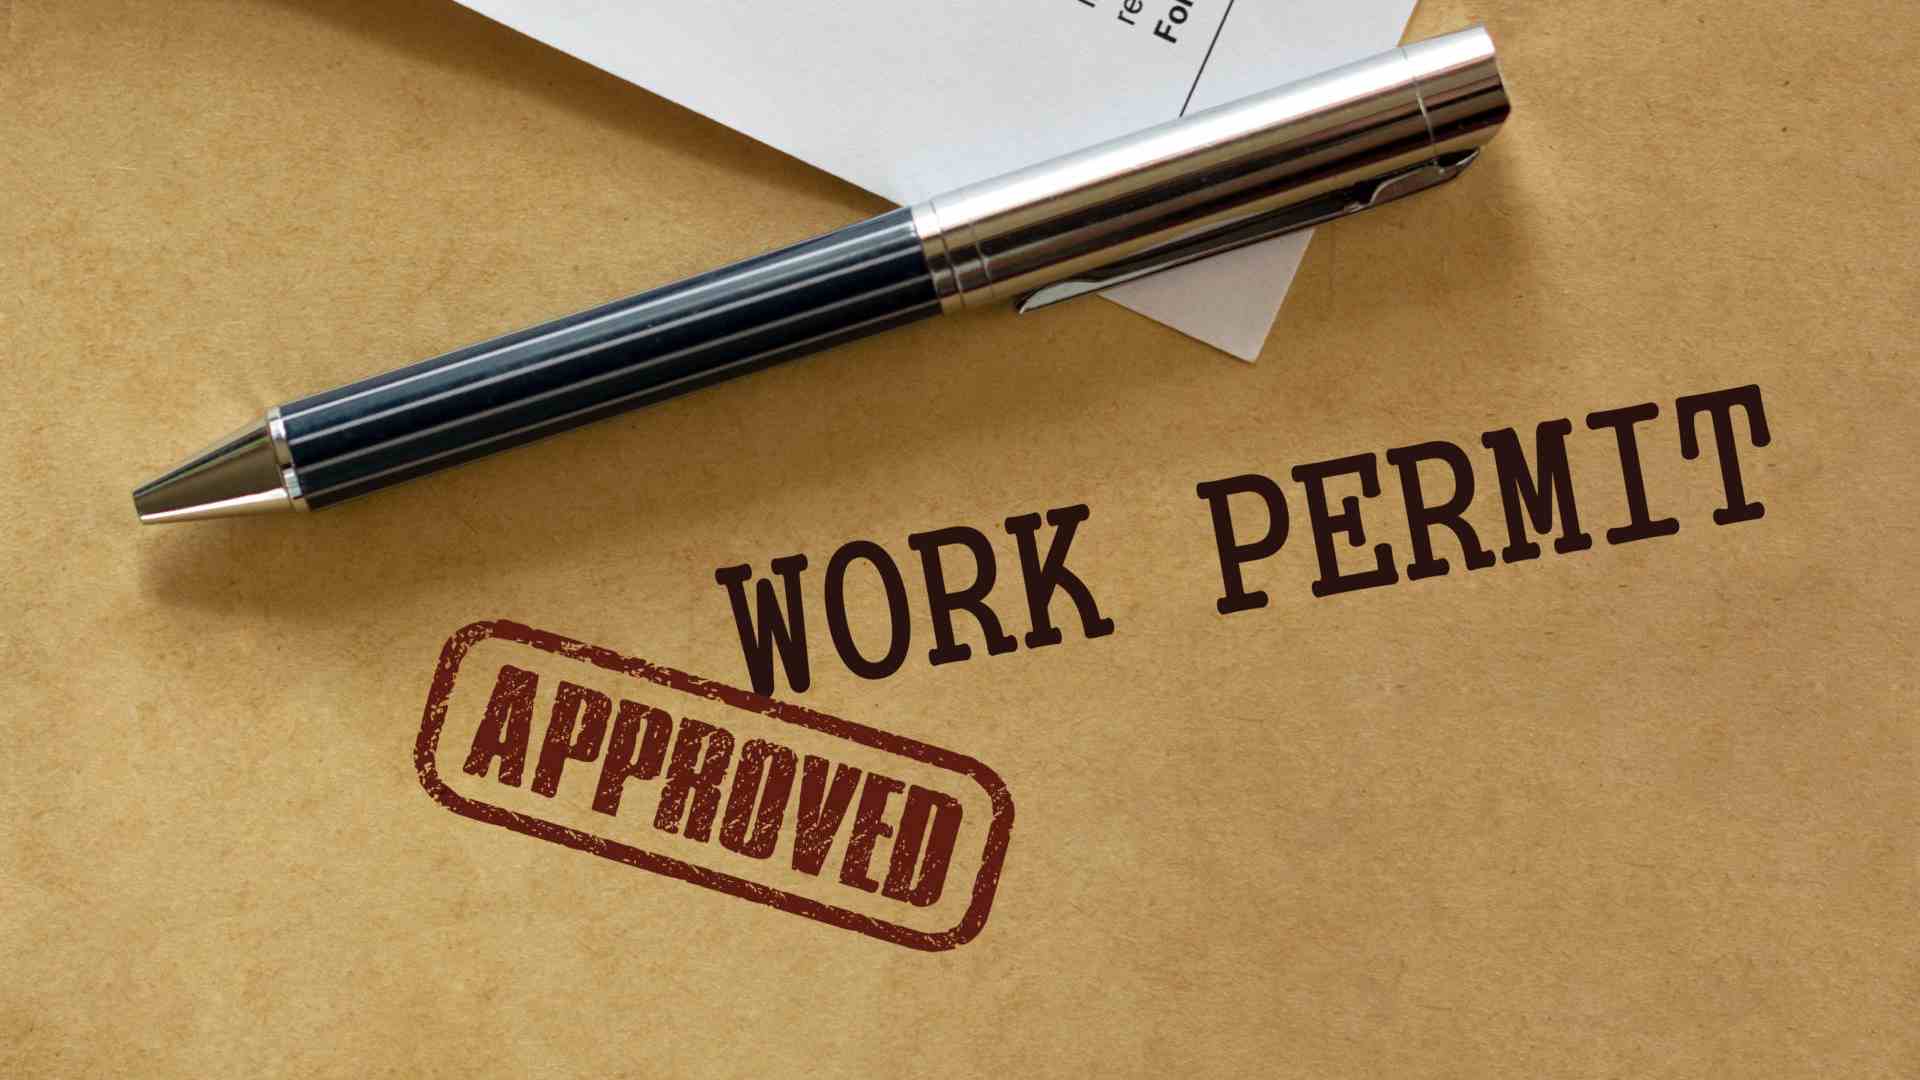 UAE Work Permit: Requirements, & Process